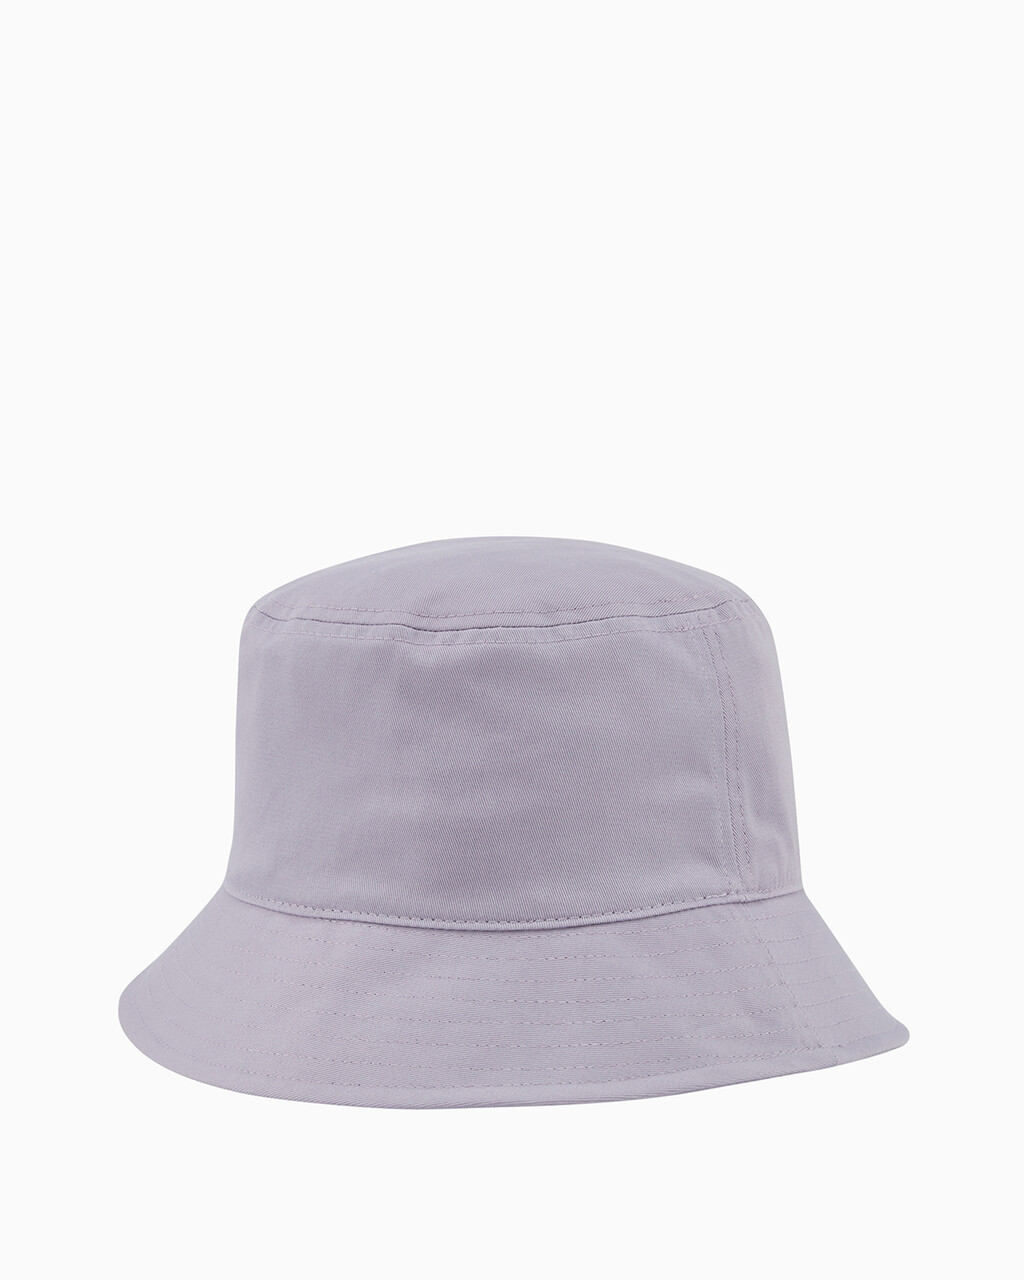 Archive Bucket Hat, LAVENDER AURA, hi-res